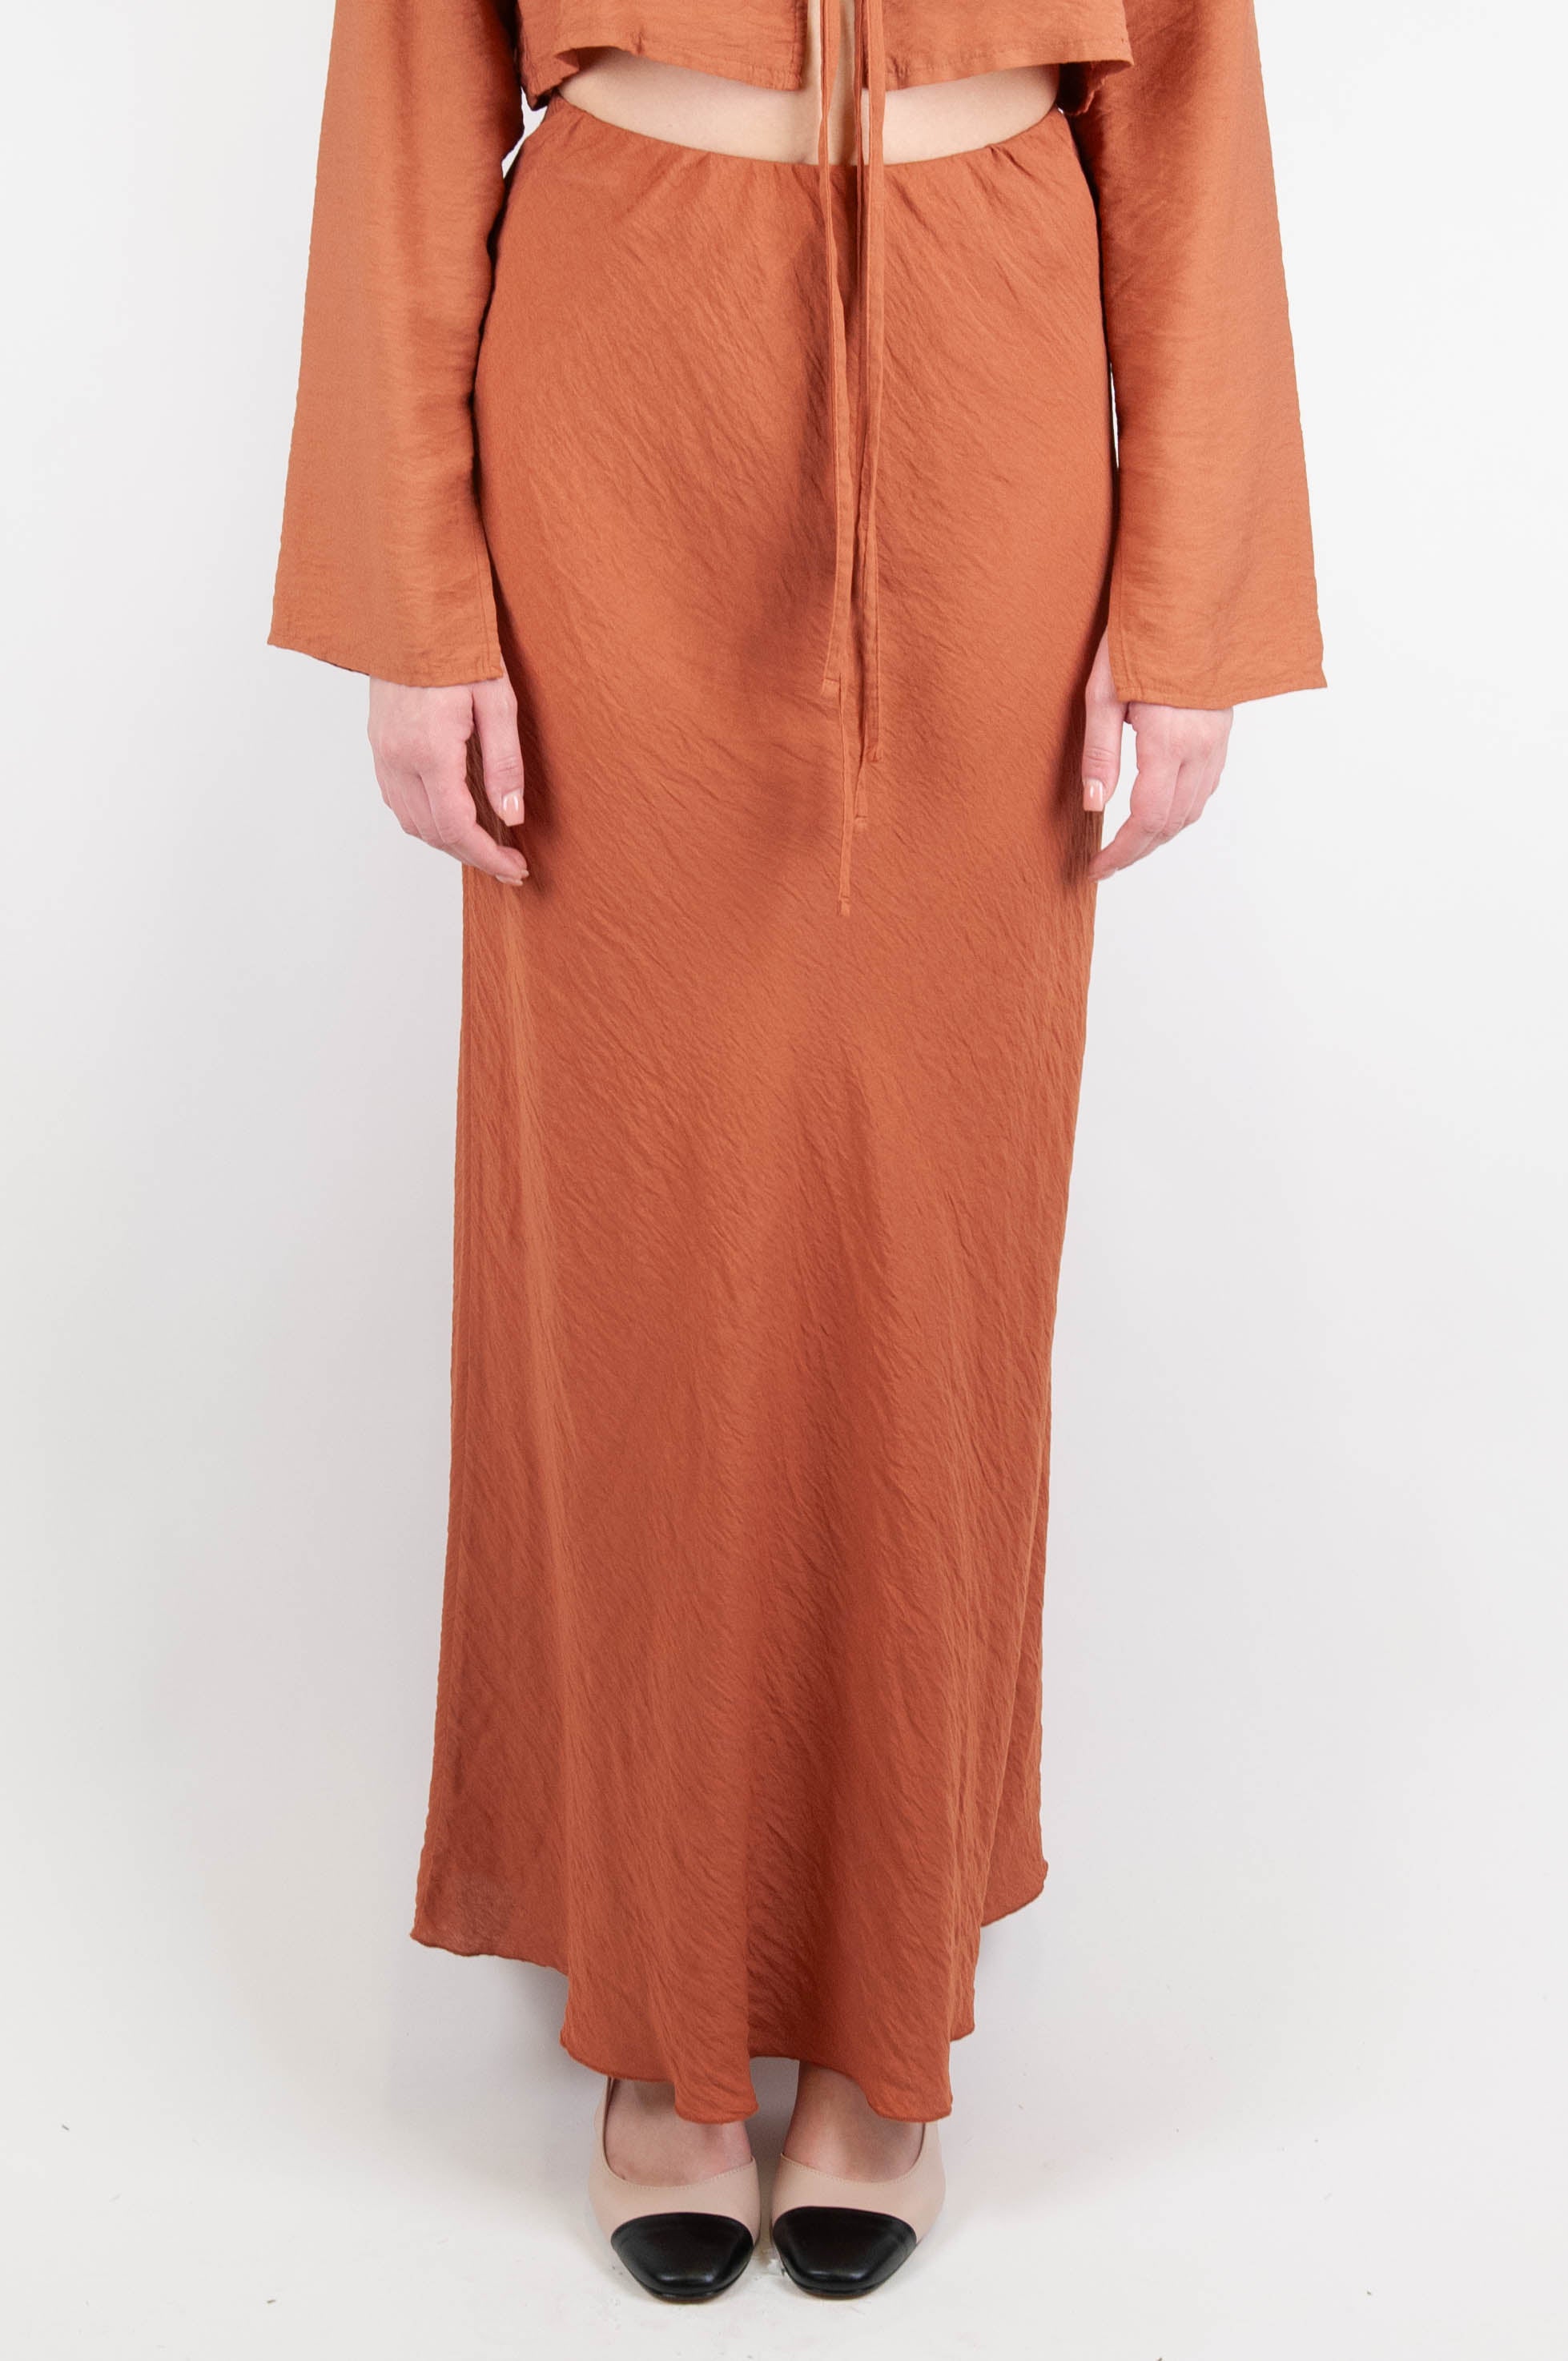 Haveone - Skirt with elastic waist